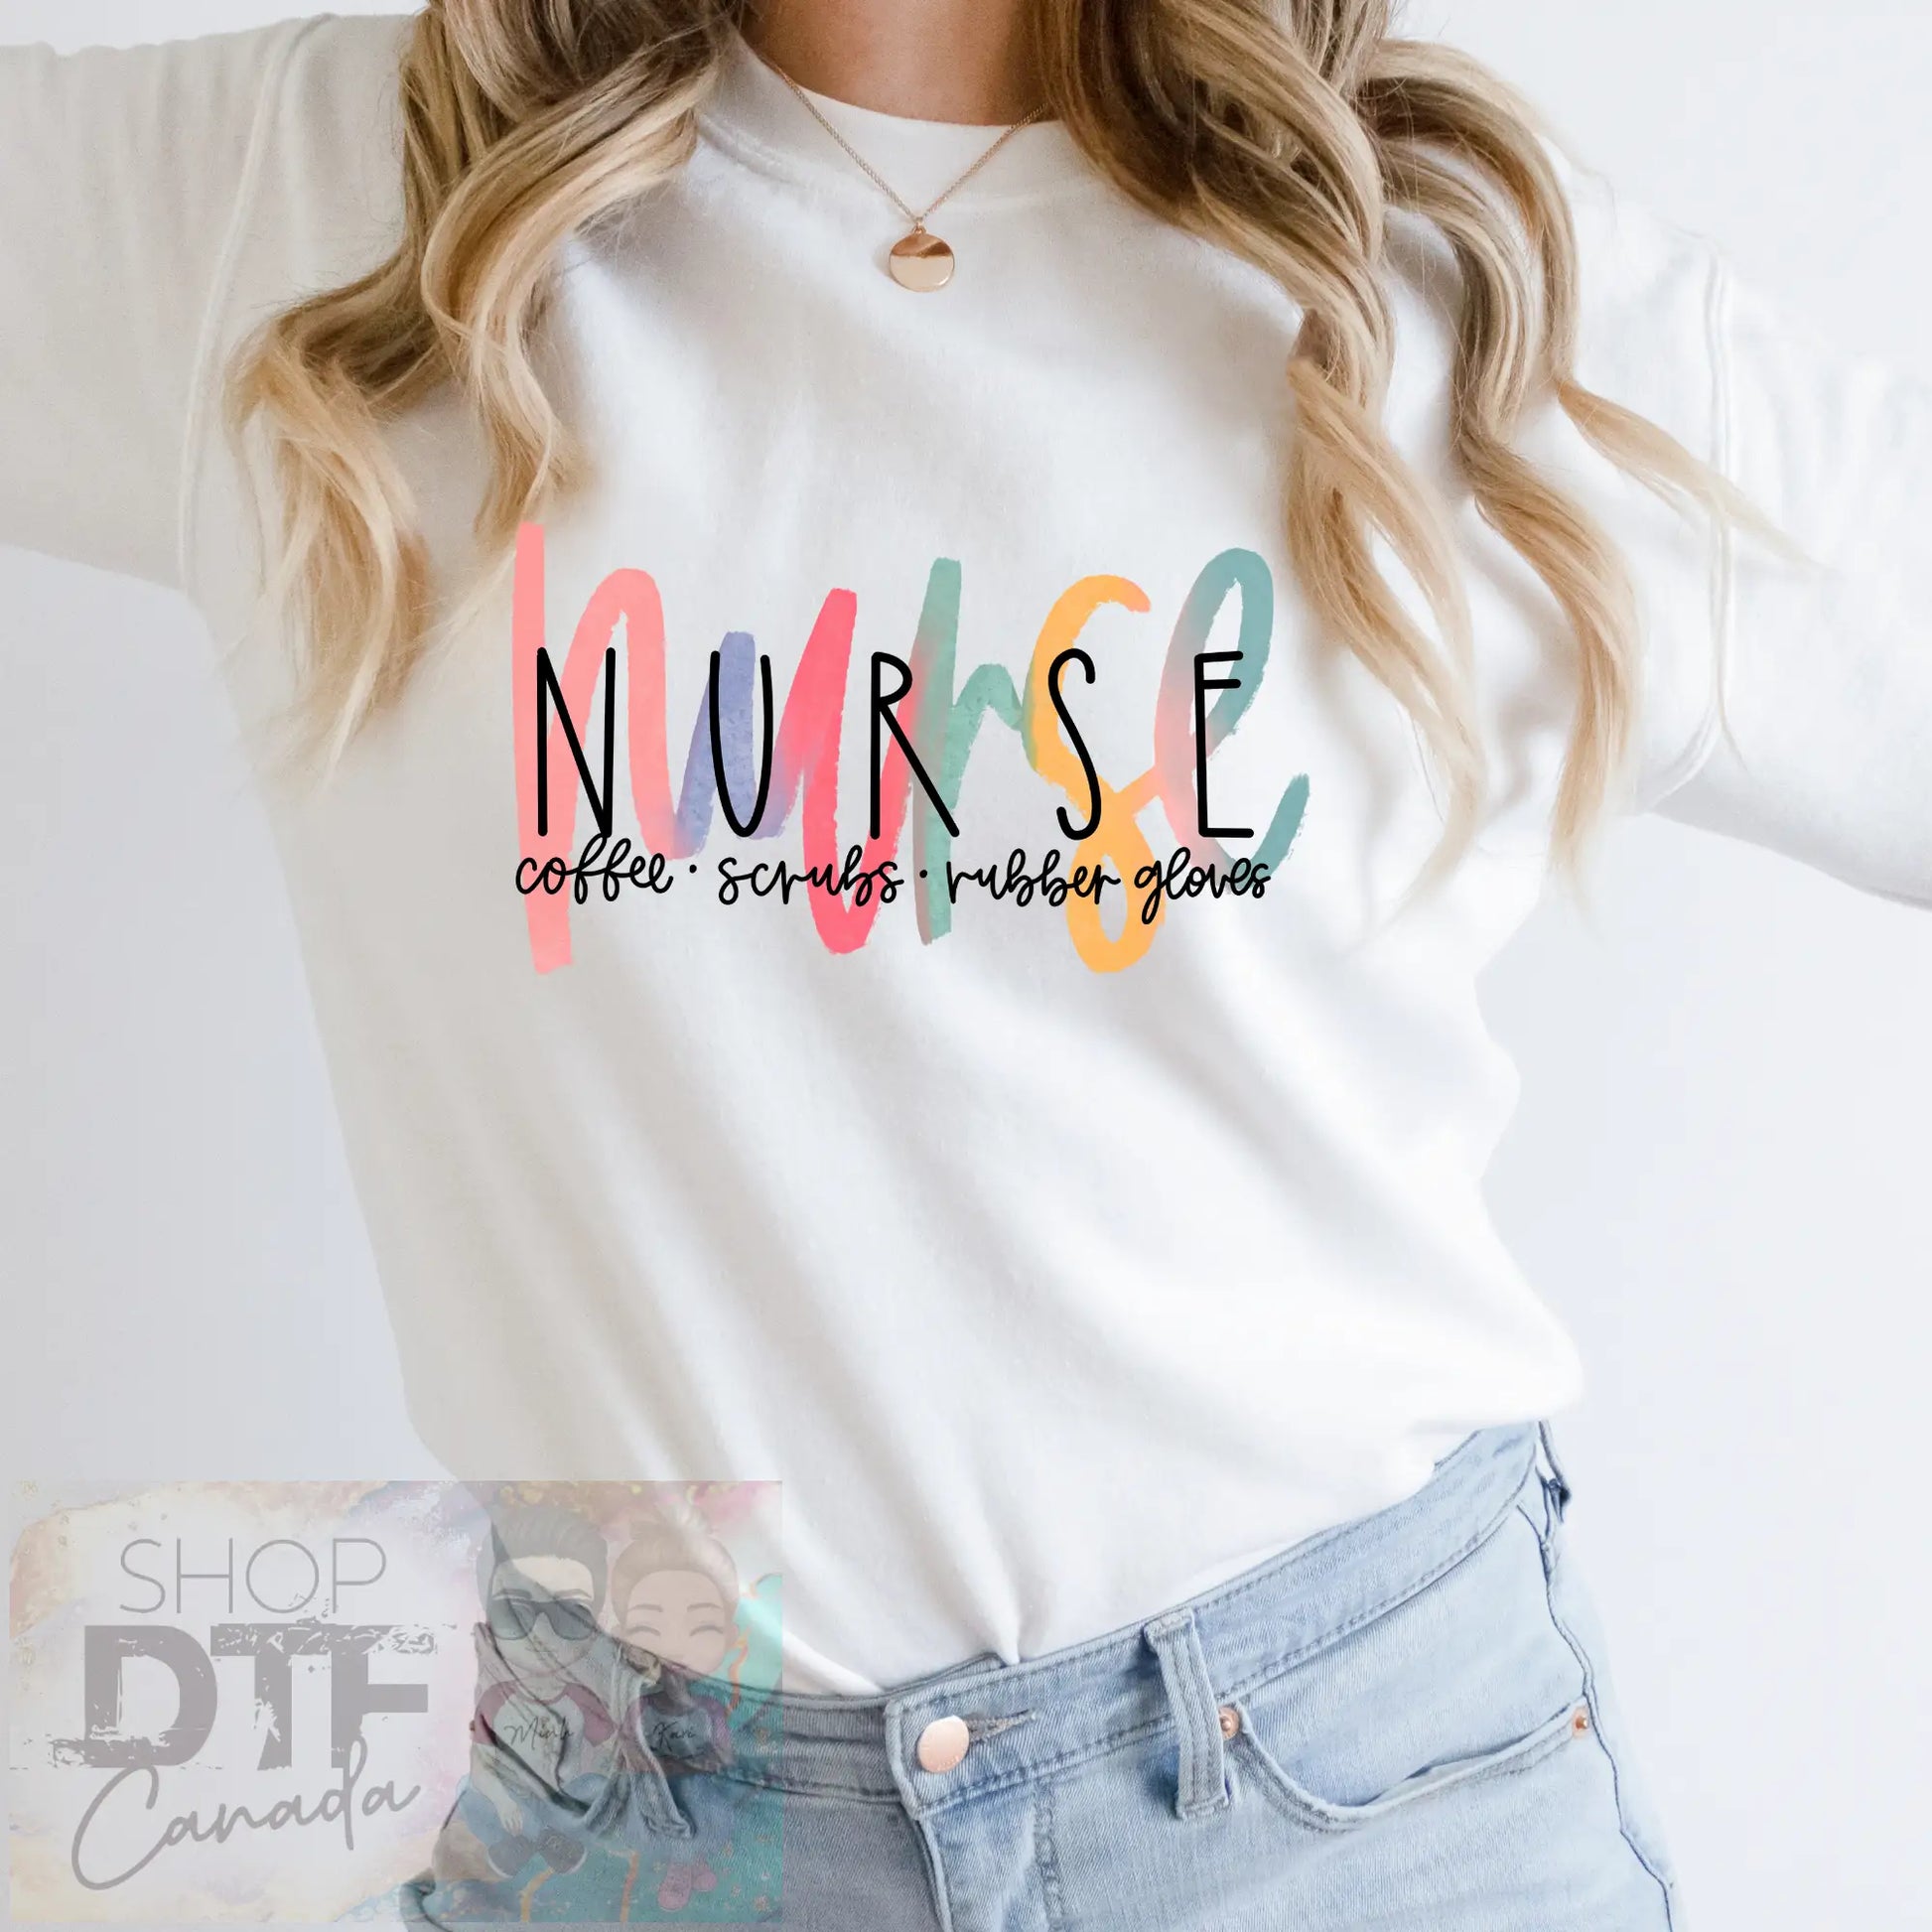 Nurse - Words - Shirts & Tops